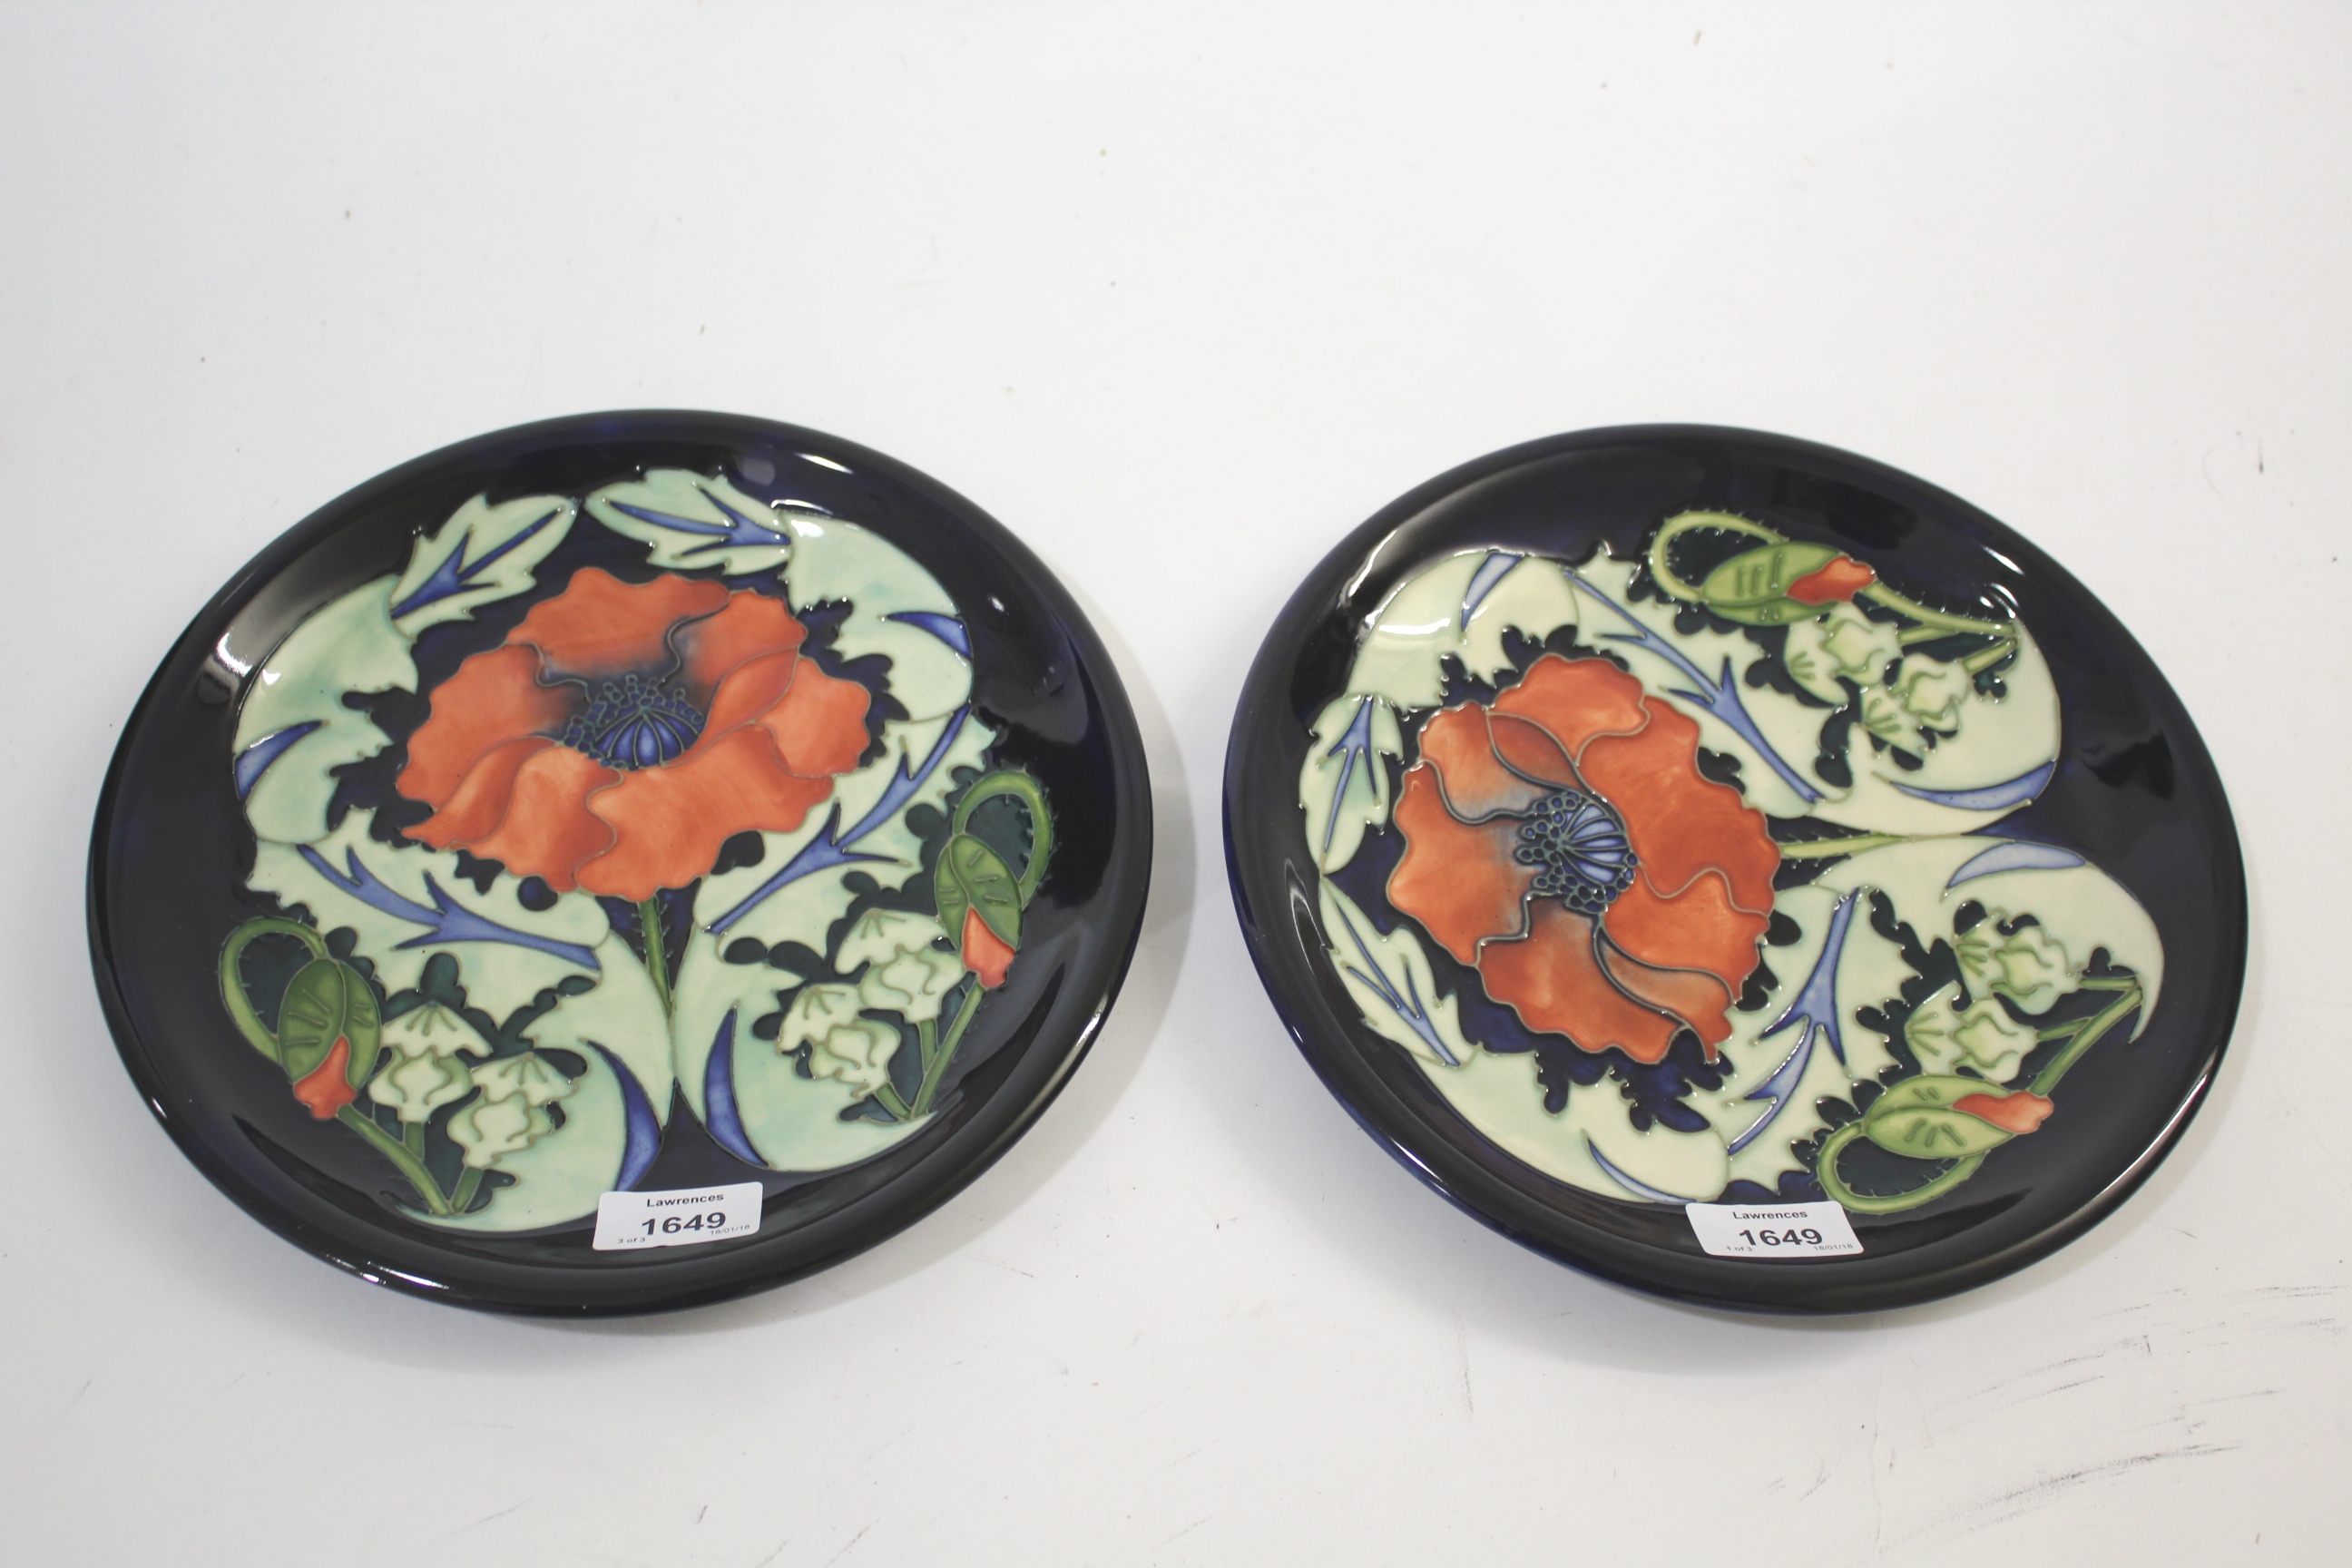 PAIR OF MOORCROFT PLATES - POPPY, AUSTRALIA a pair of modern Moorcroft plates in the Poppy design, - Image 2 of 7